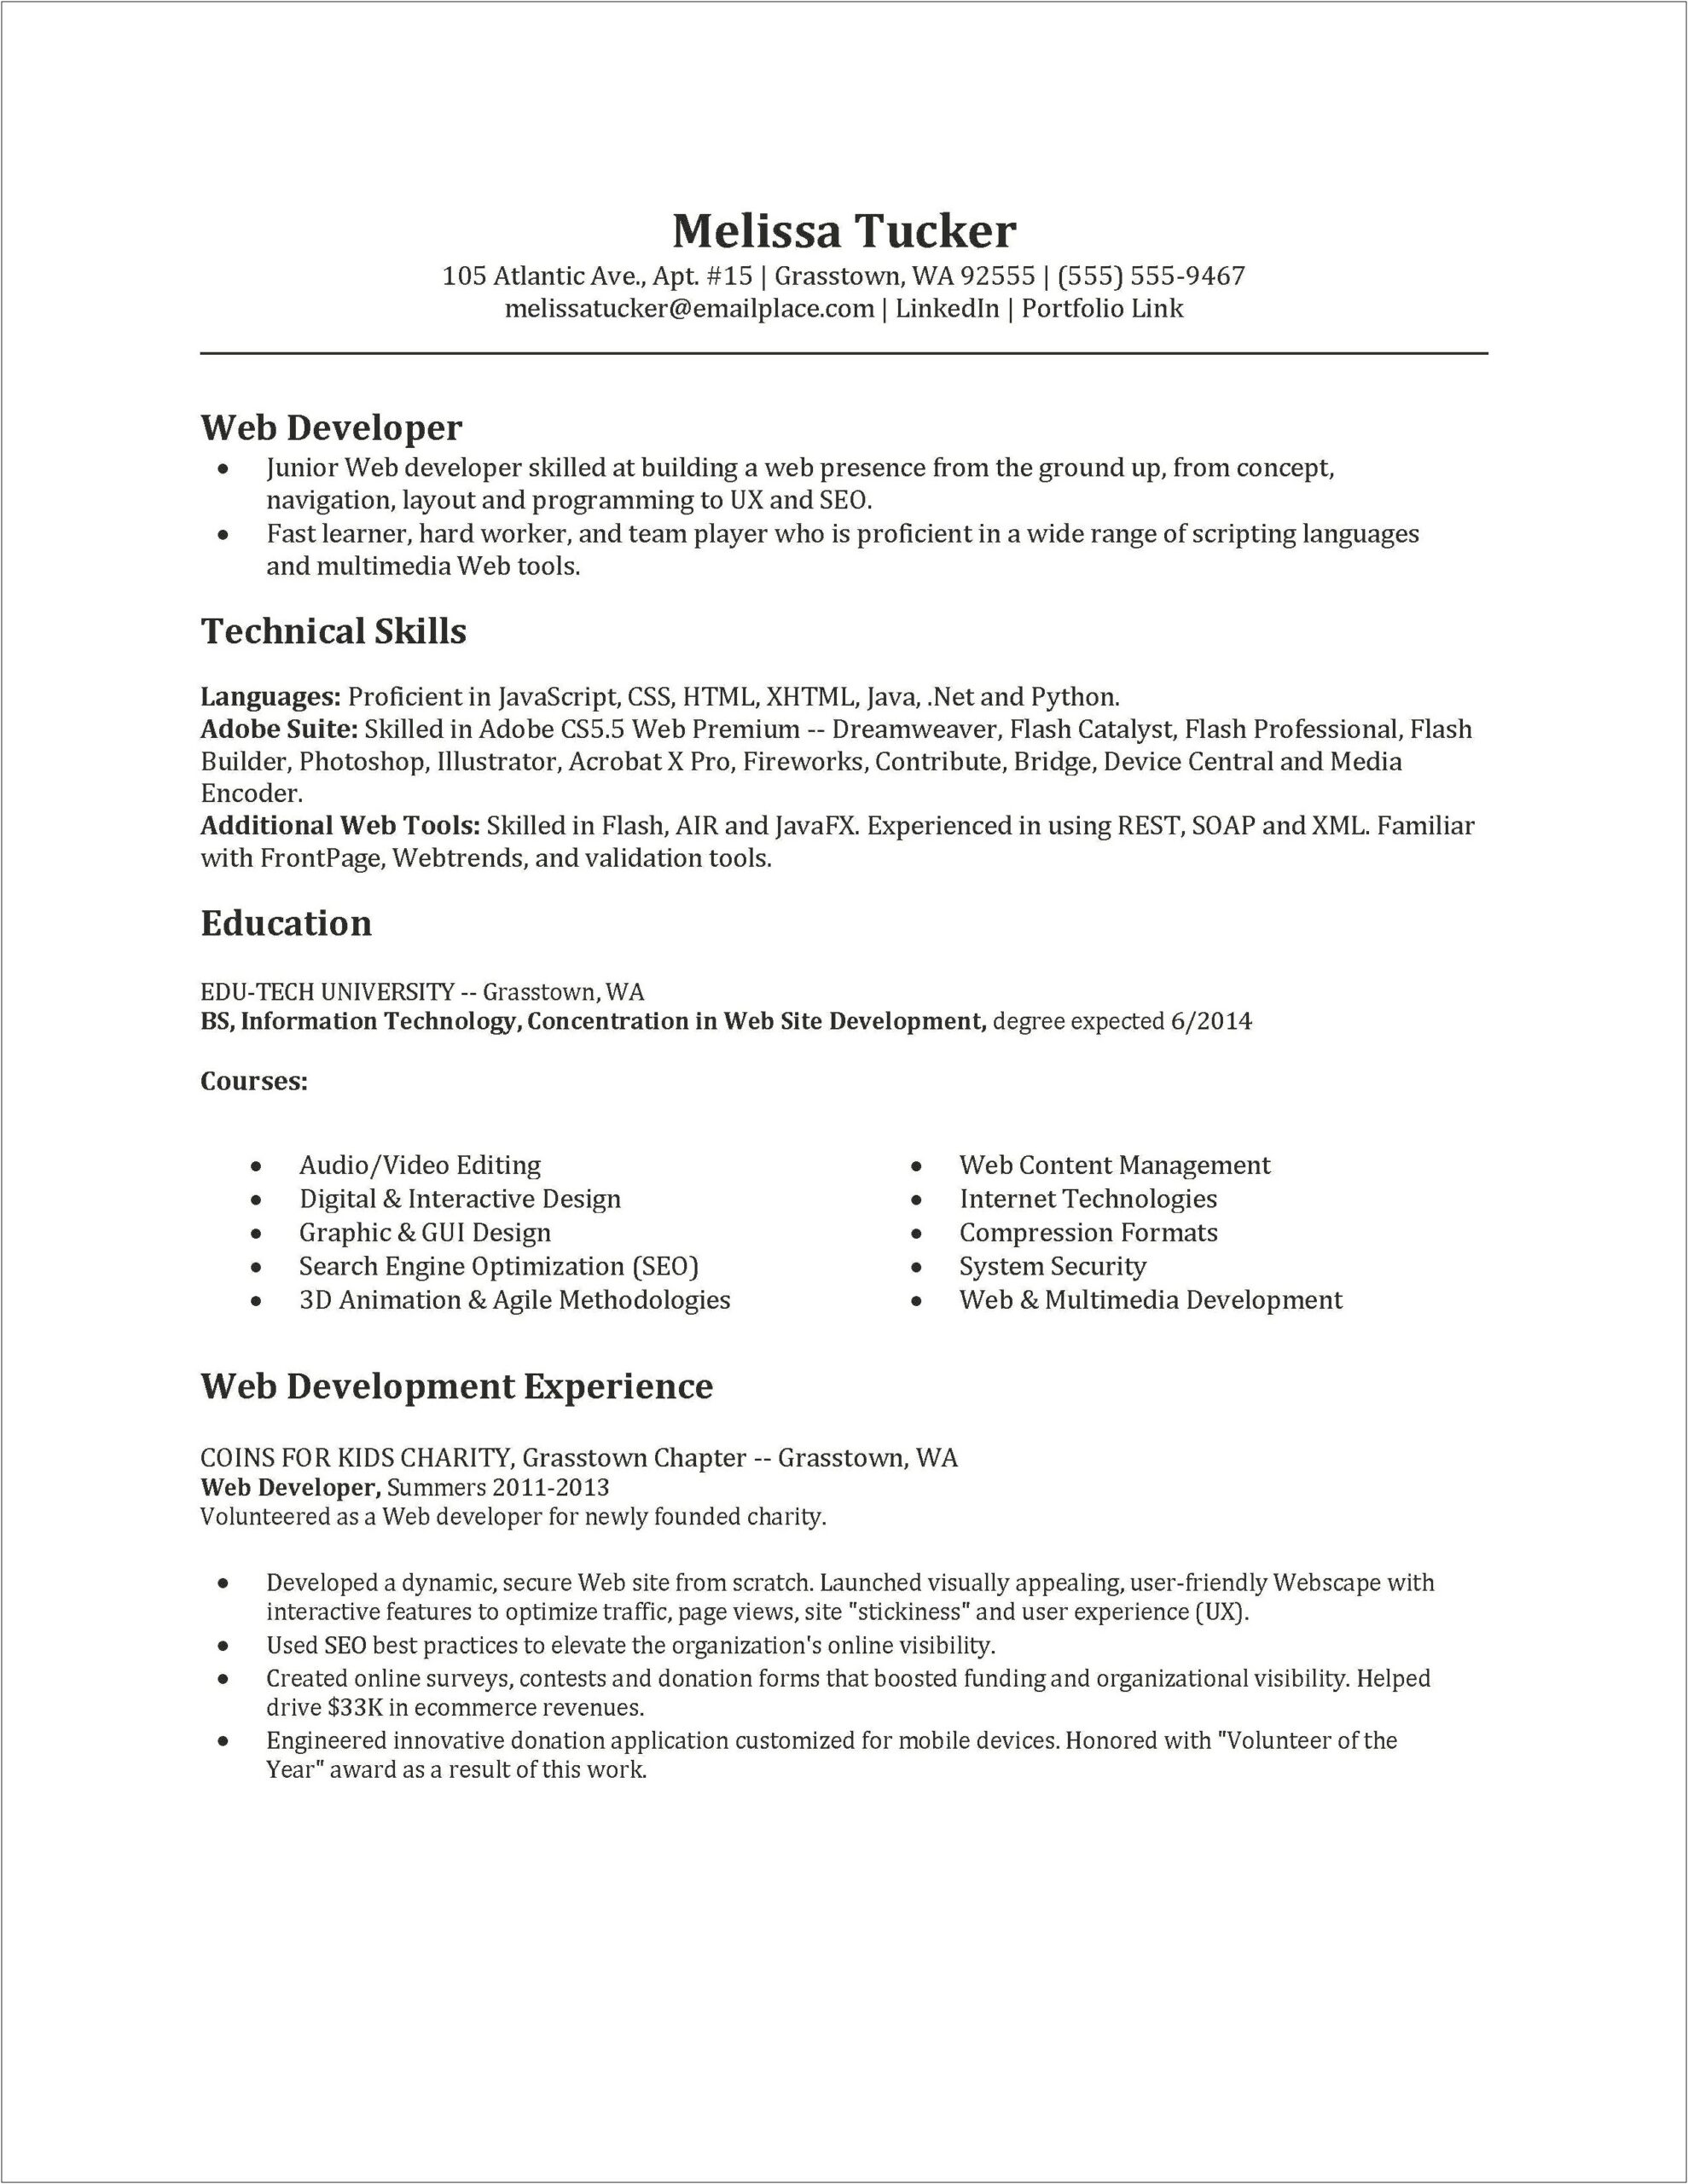 Sample Resume For 6 Months Java Developer